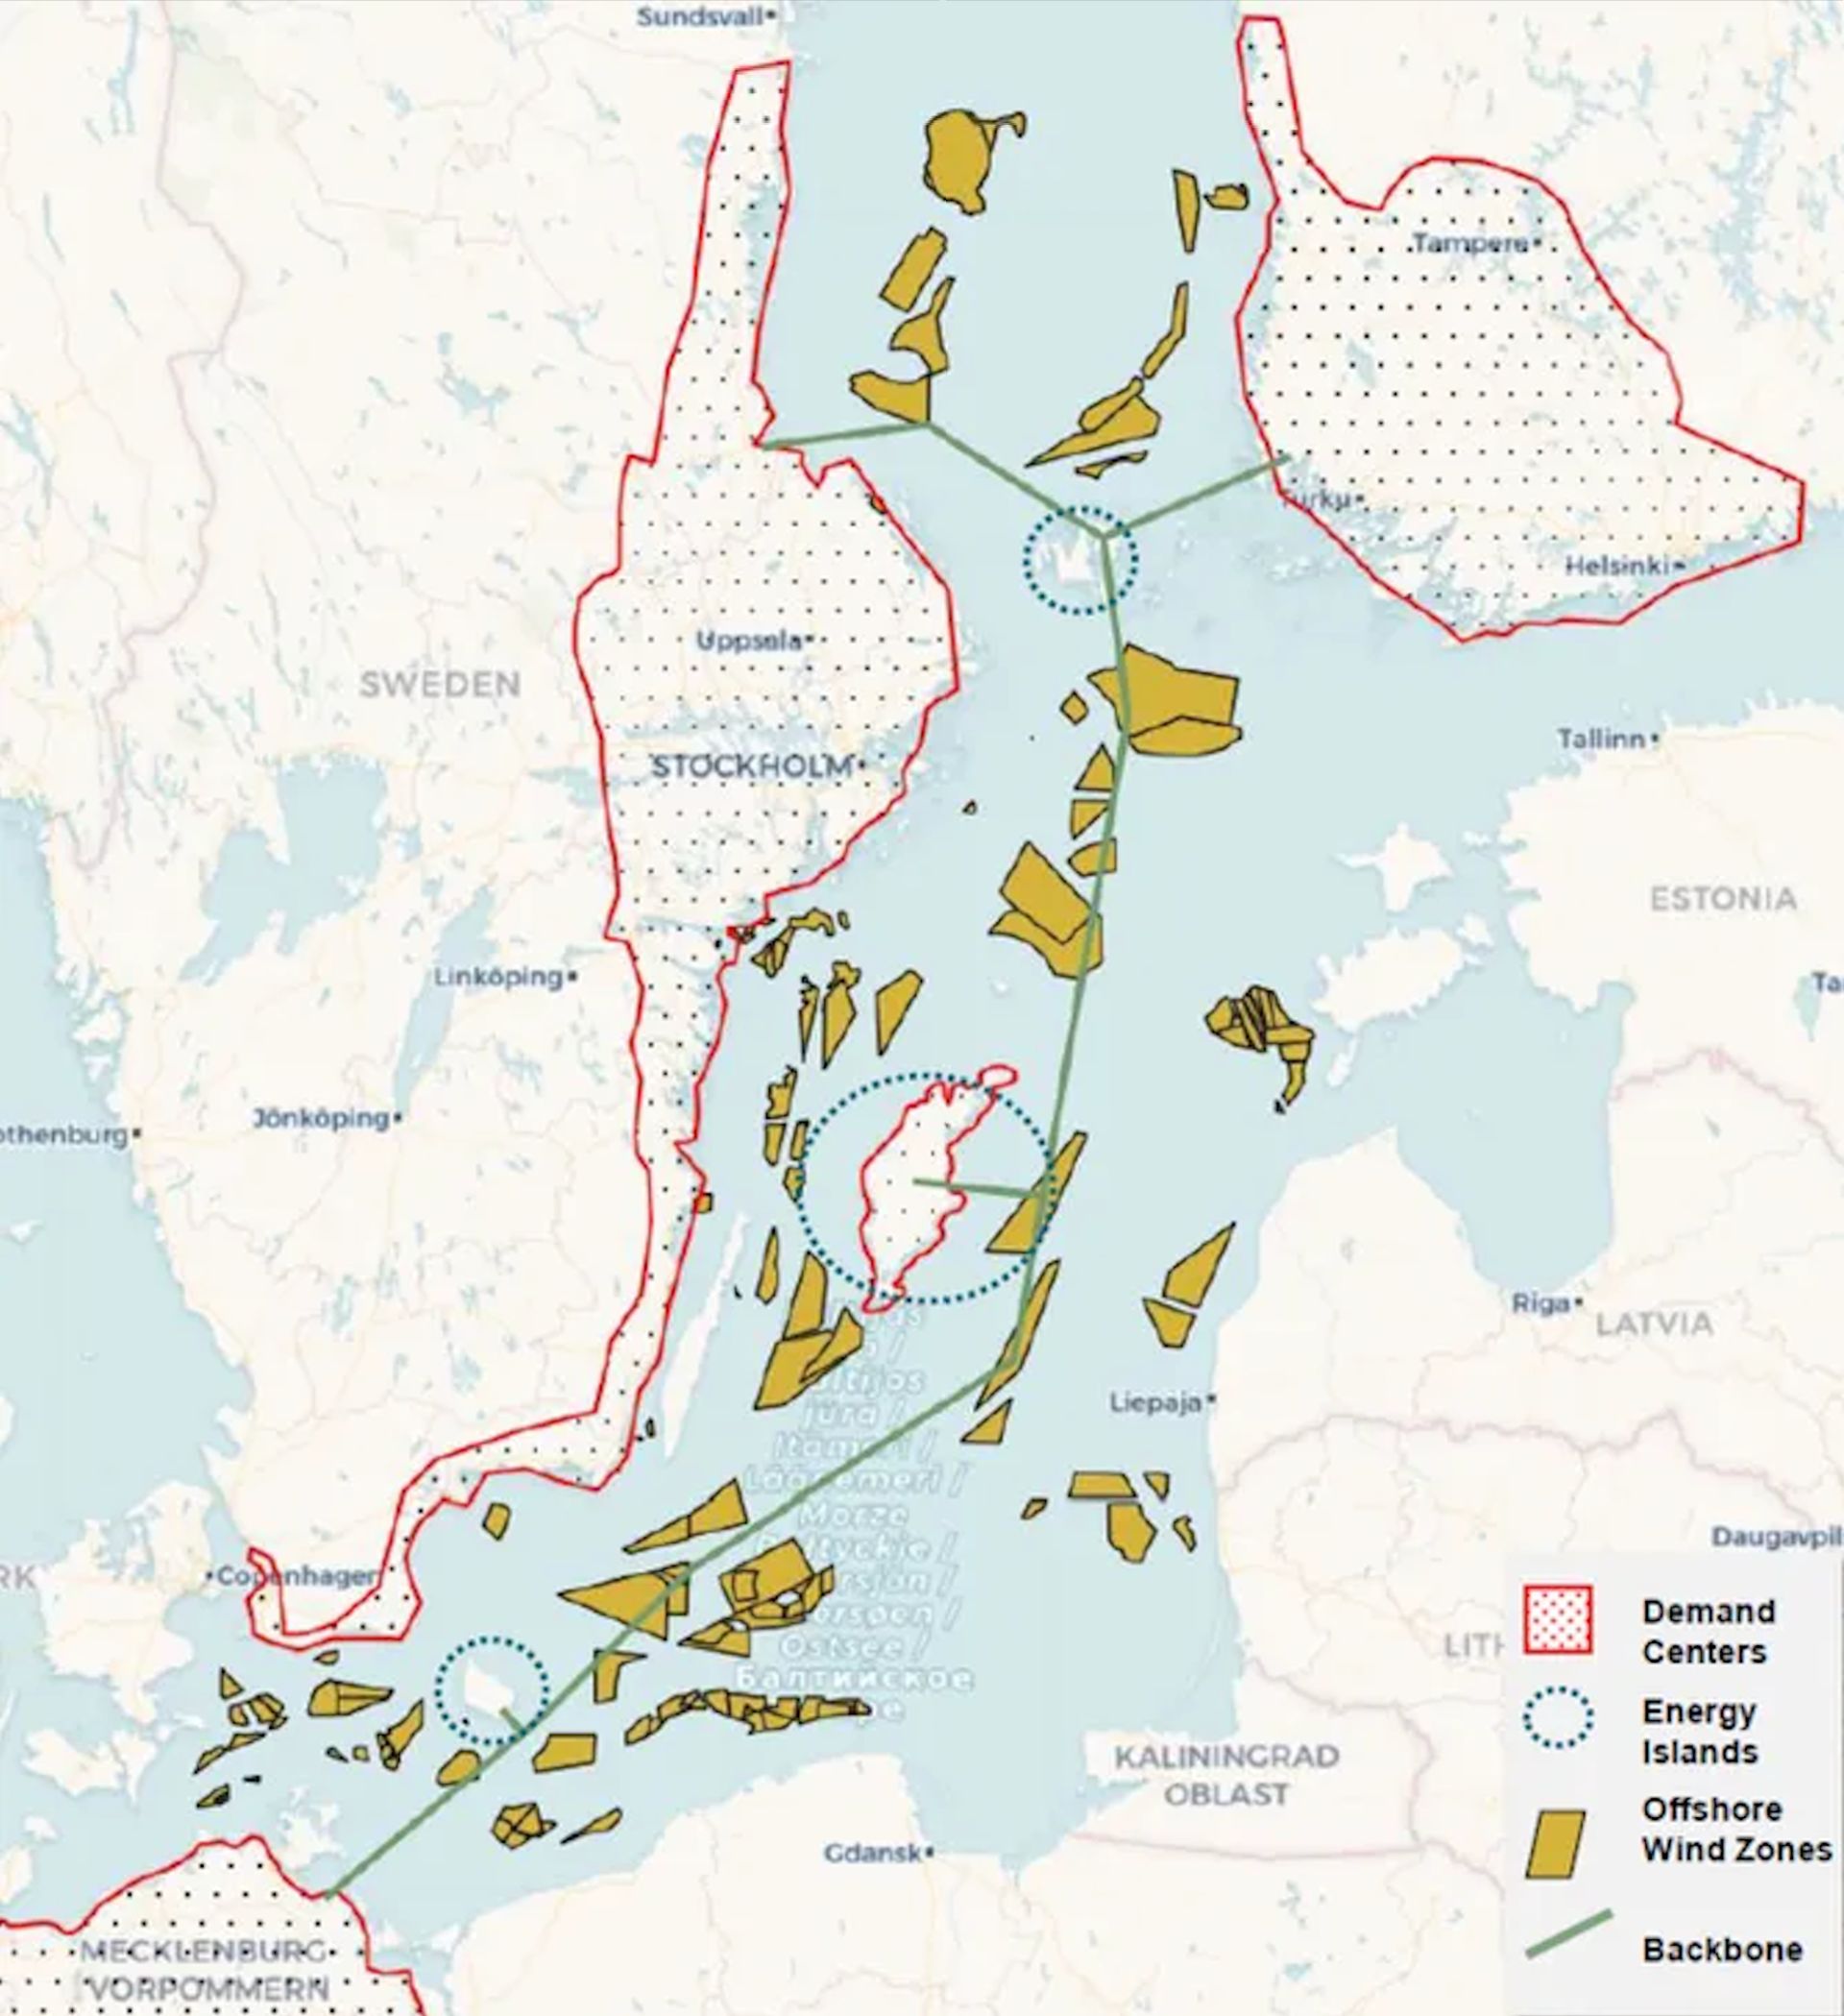 Pressrelease "OX2 to investigate the possibility to develop offshore hydrogen pipeline in the Baltic Sea" www.ox2.com